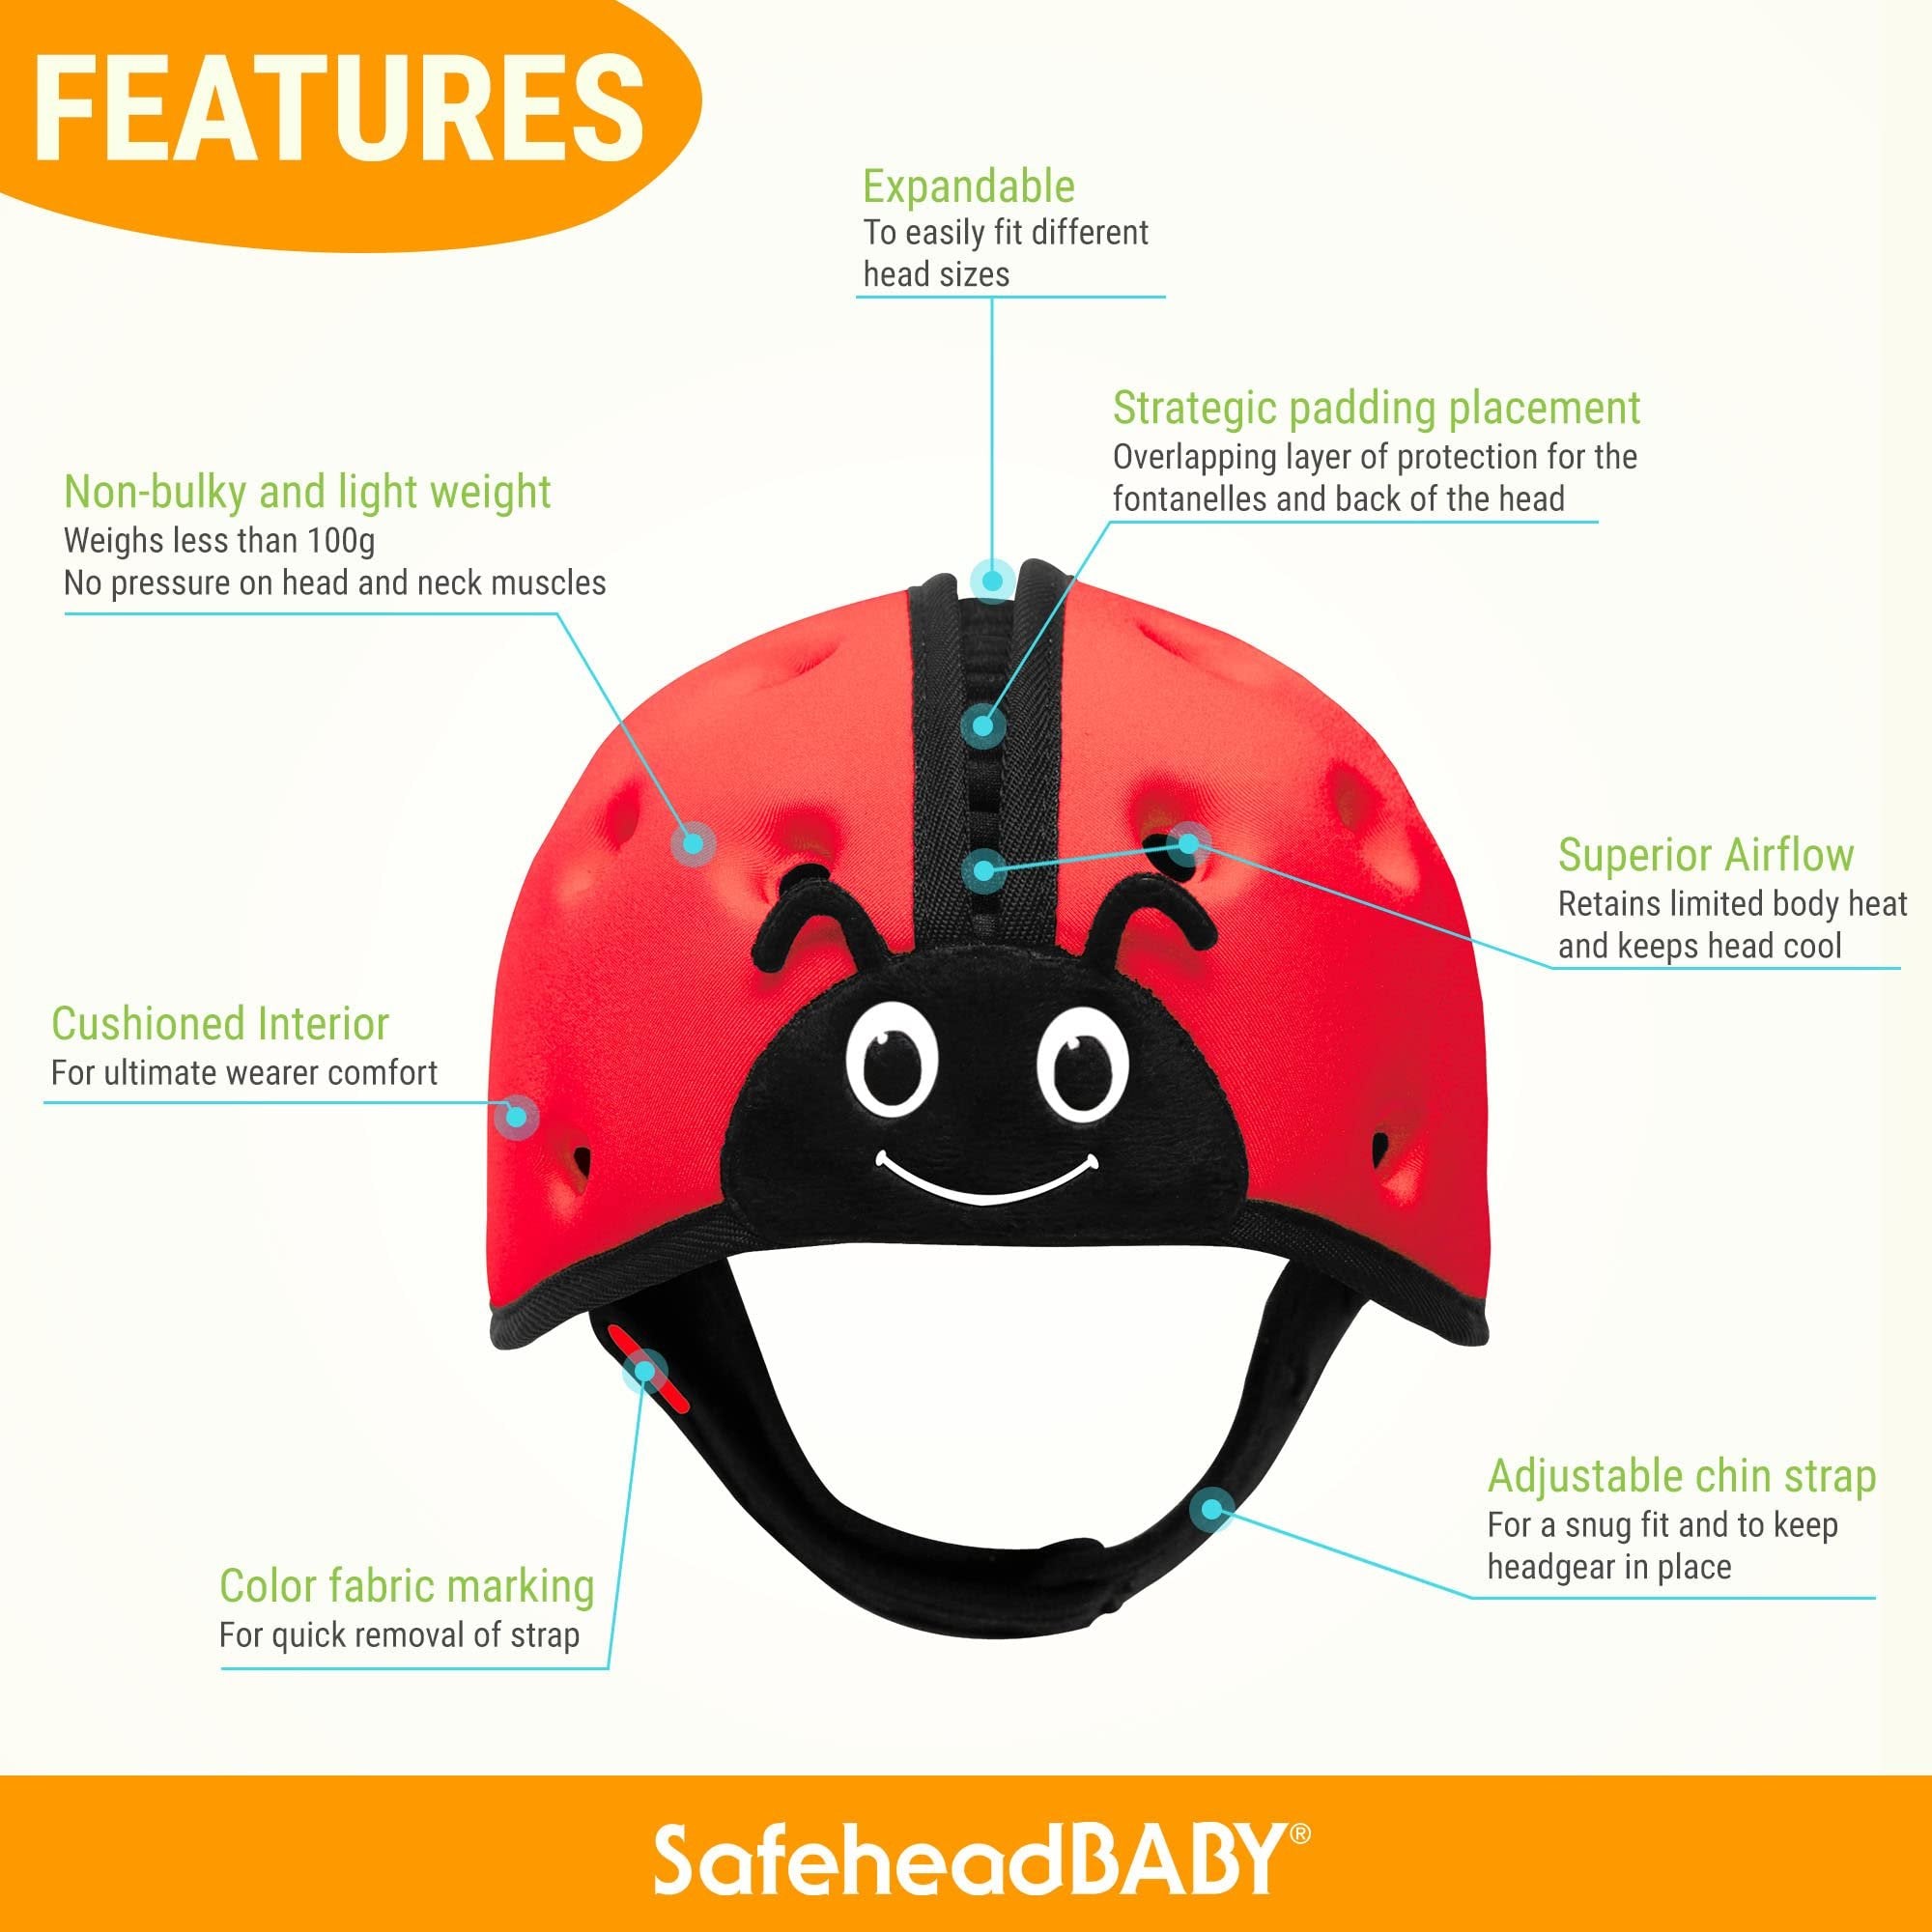 SafeheadBABY Ladybird Pink Infant Safety Helmet - Adjustable & Expandable, Ultra-Lightweight, One Size